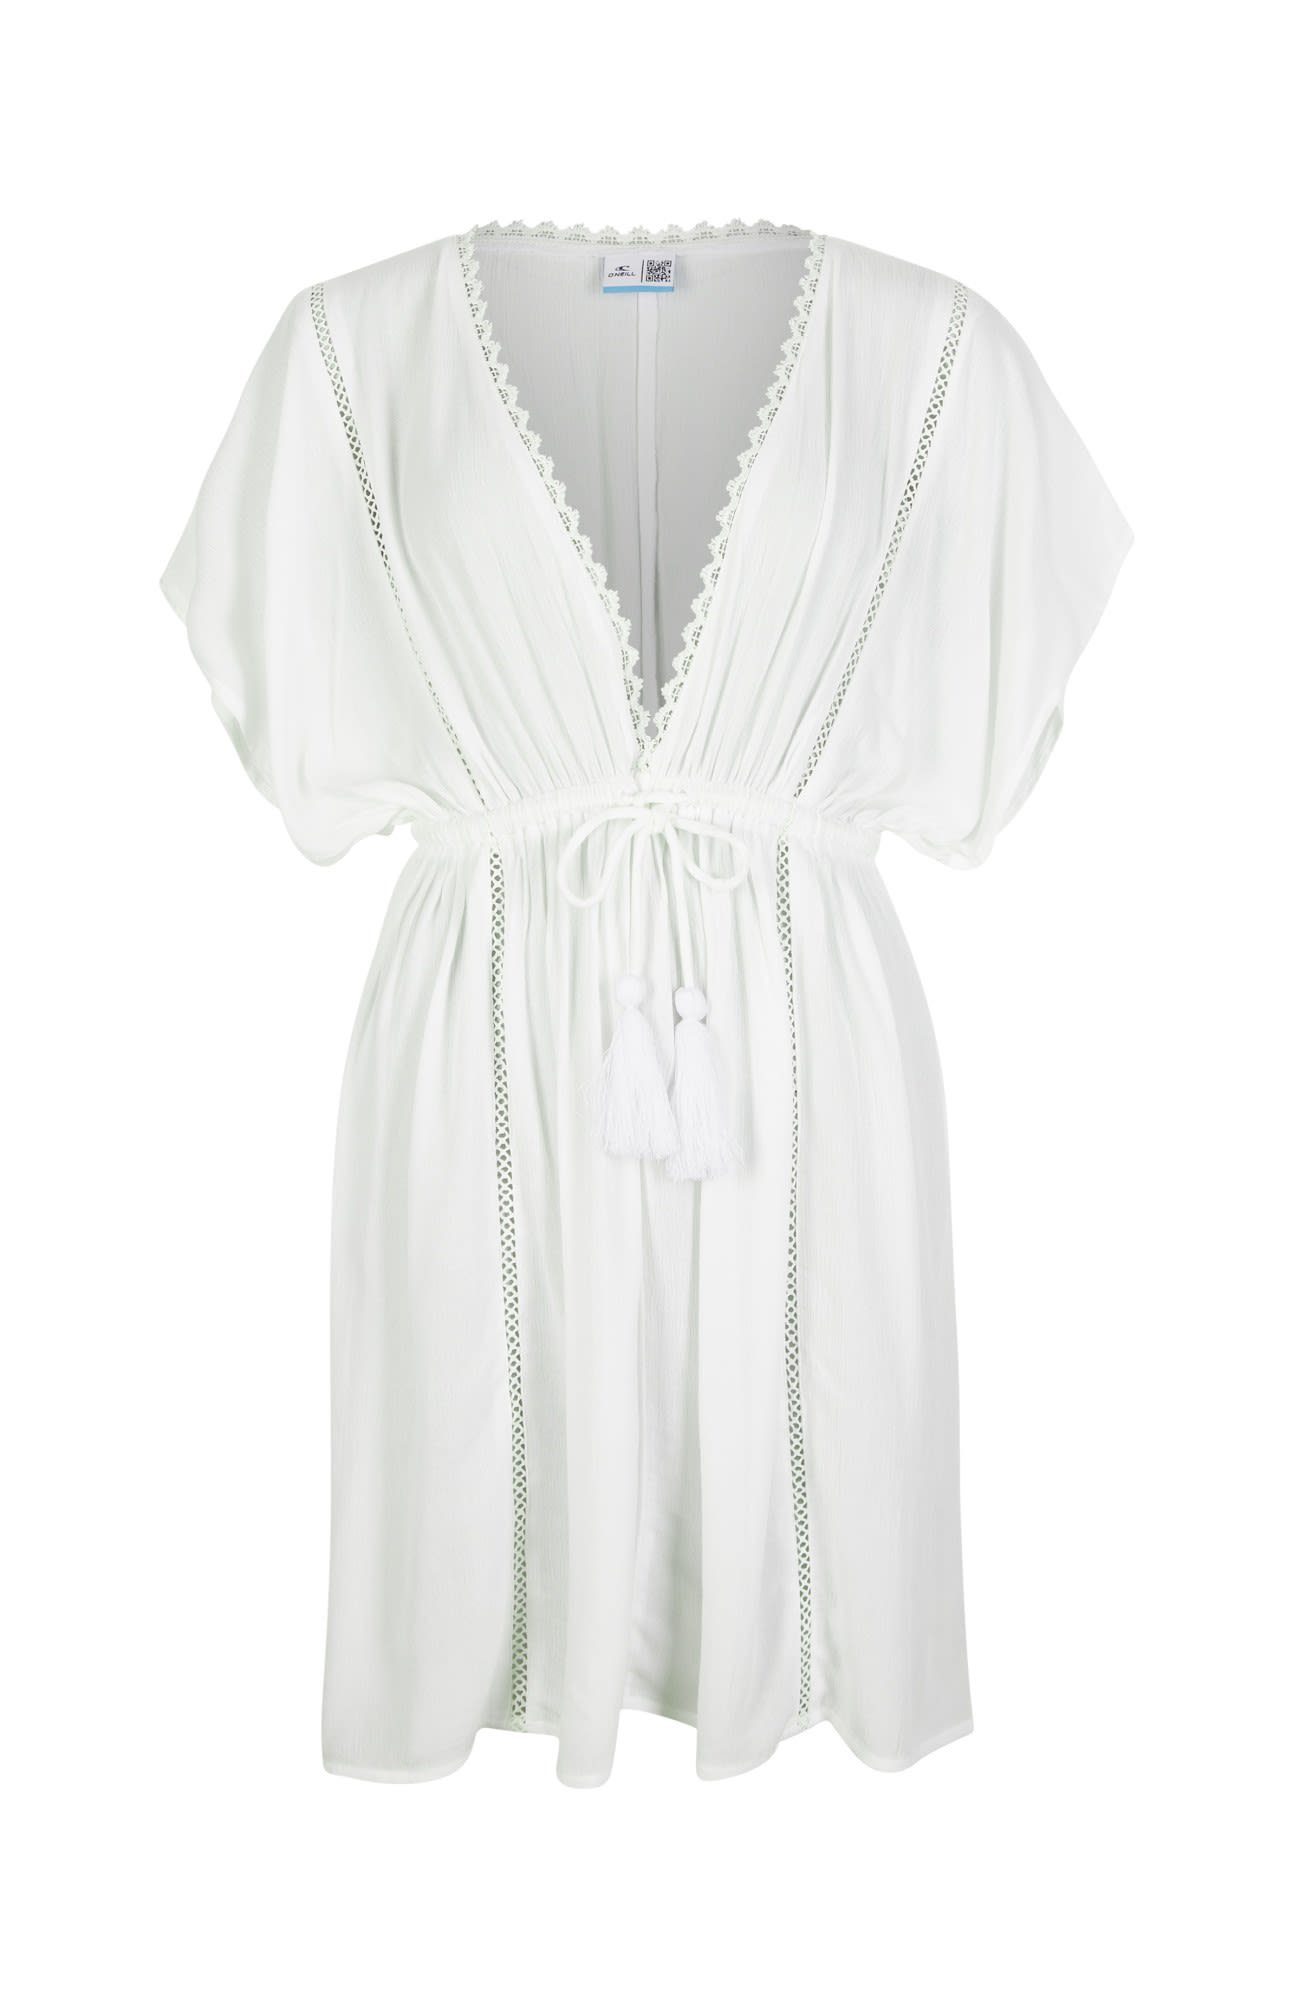 White W Oneill Snow O'Neill Sommerkleid Kleid Cover Up Damen Beach Mona